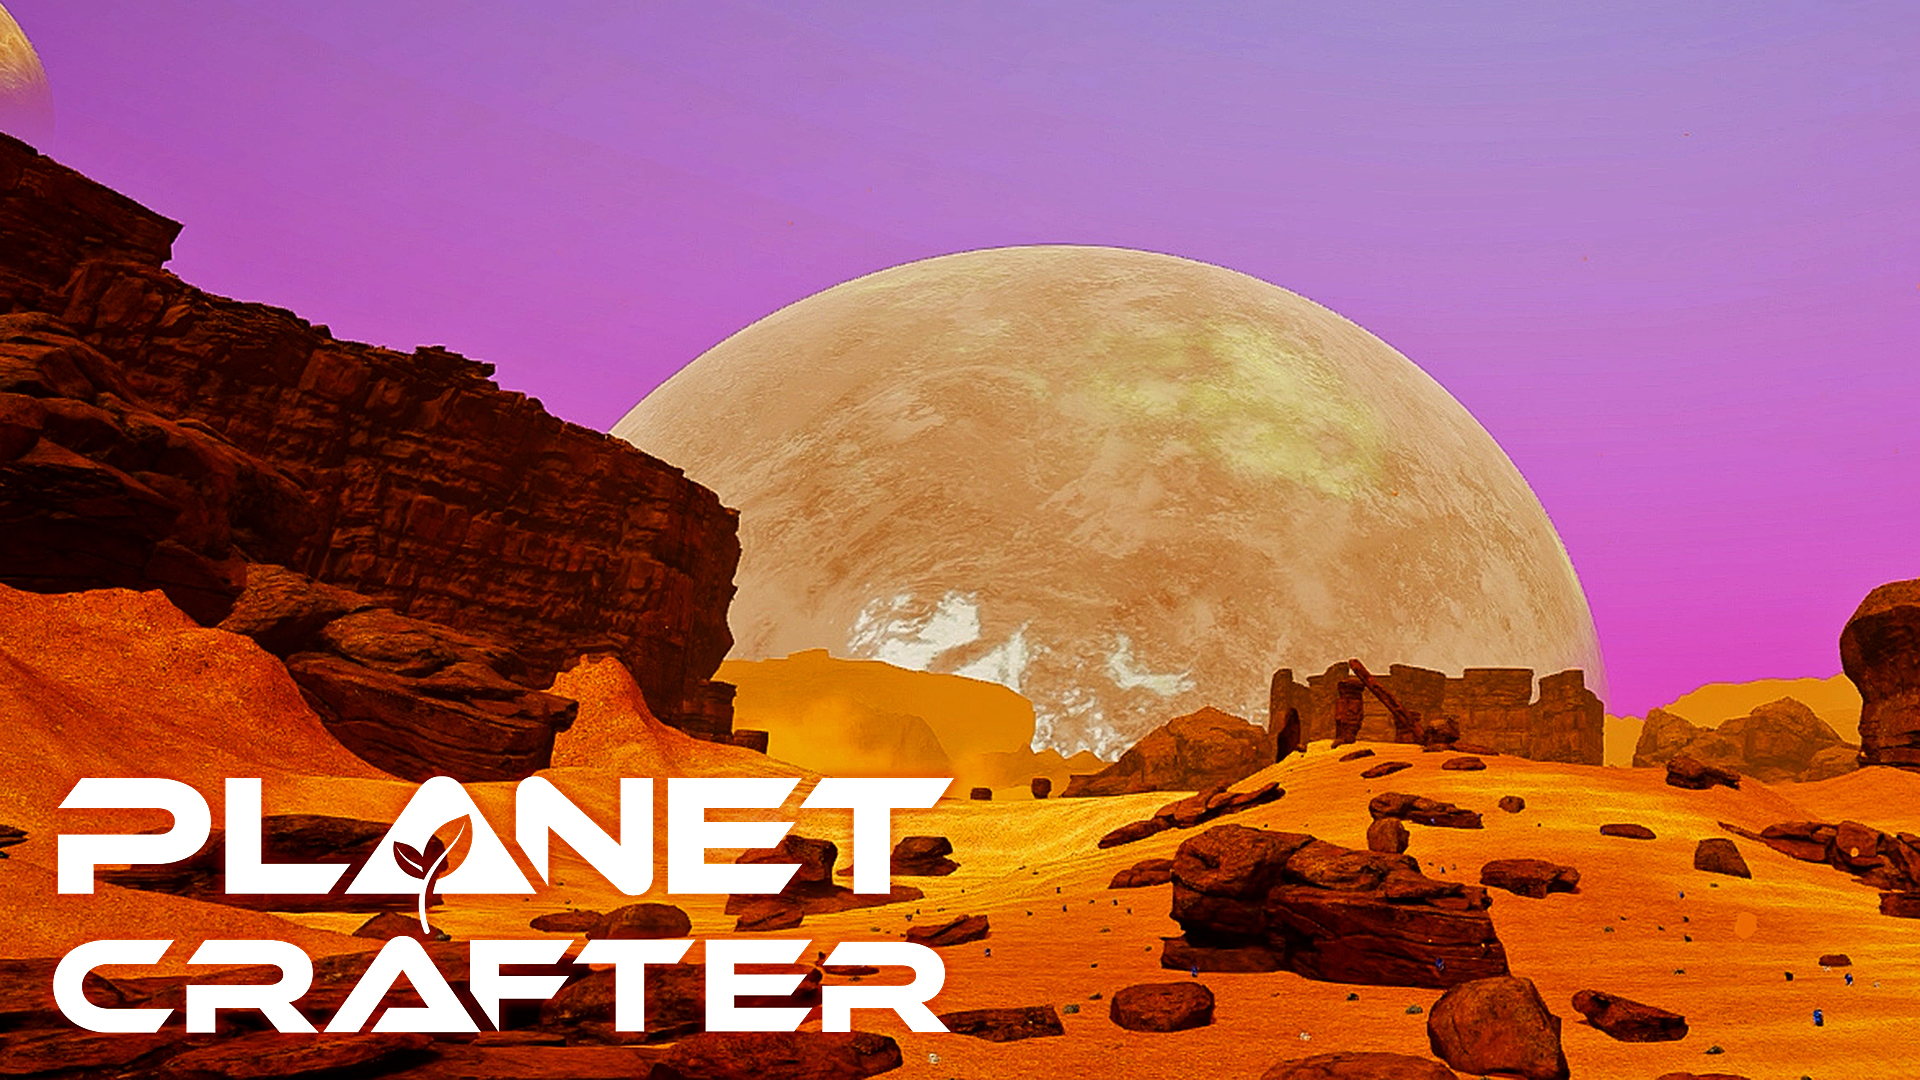 Зе планет крафтер. The Planet Crafter алюминий. The Planet Crafter: Prologue. Зе планет Крафтер Пролог. Planet Crafter базы.